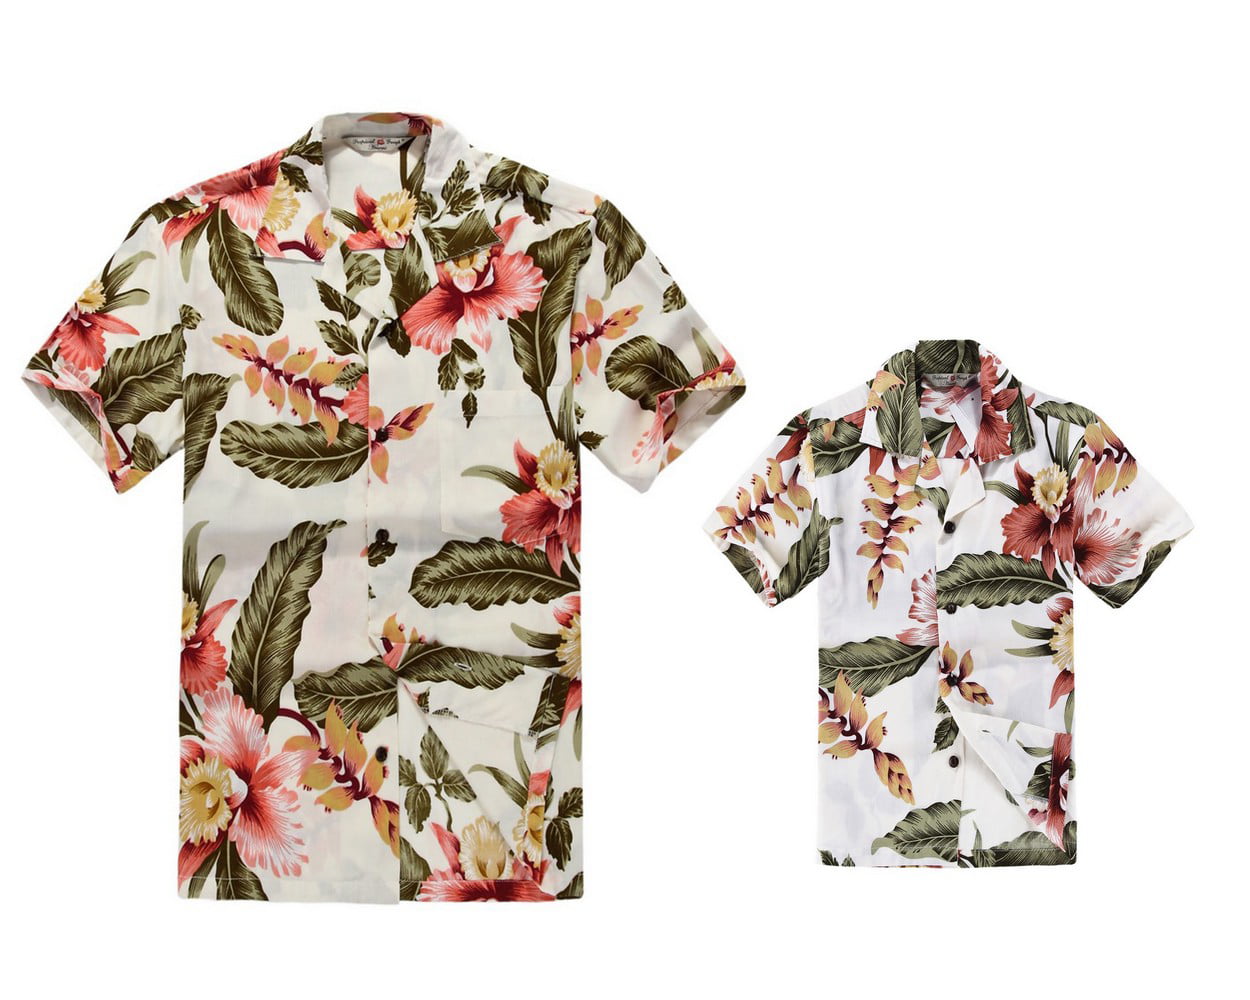 Mens Island Sunset Hawaiian Aloha Shirt Alohawears Clothing Company Make in Hawaii